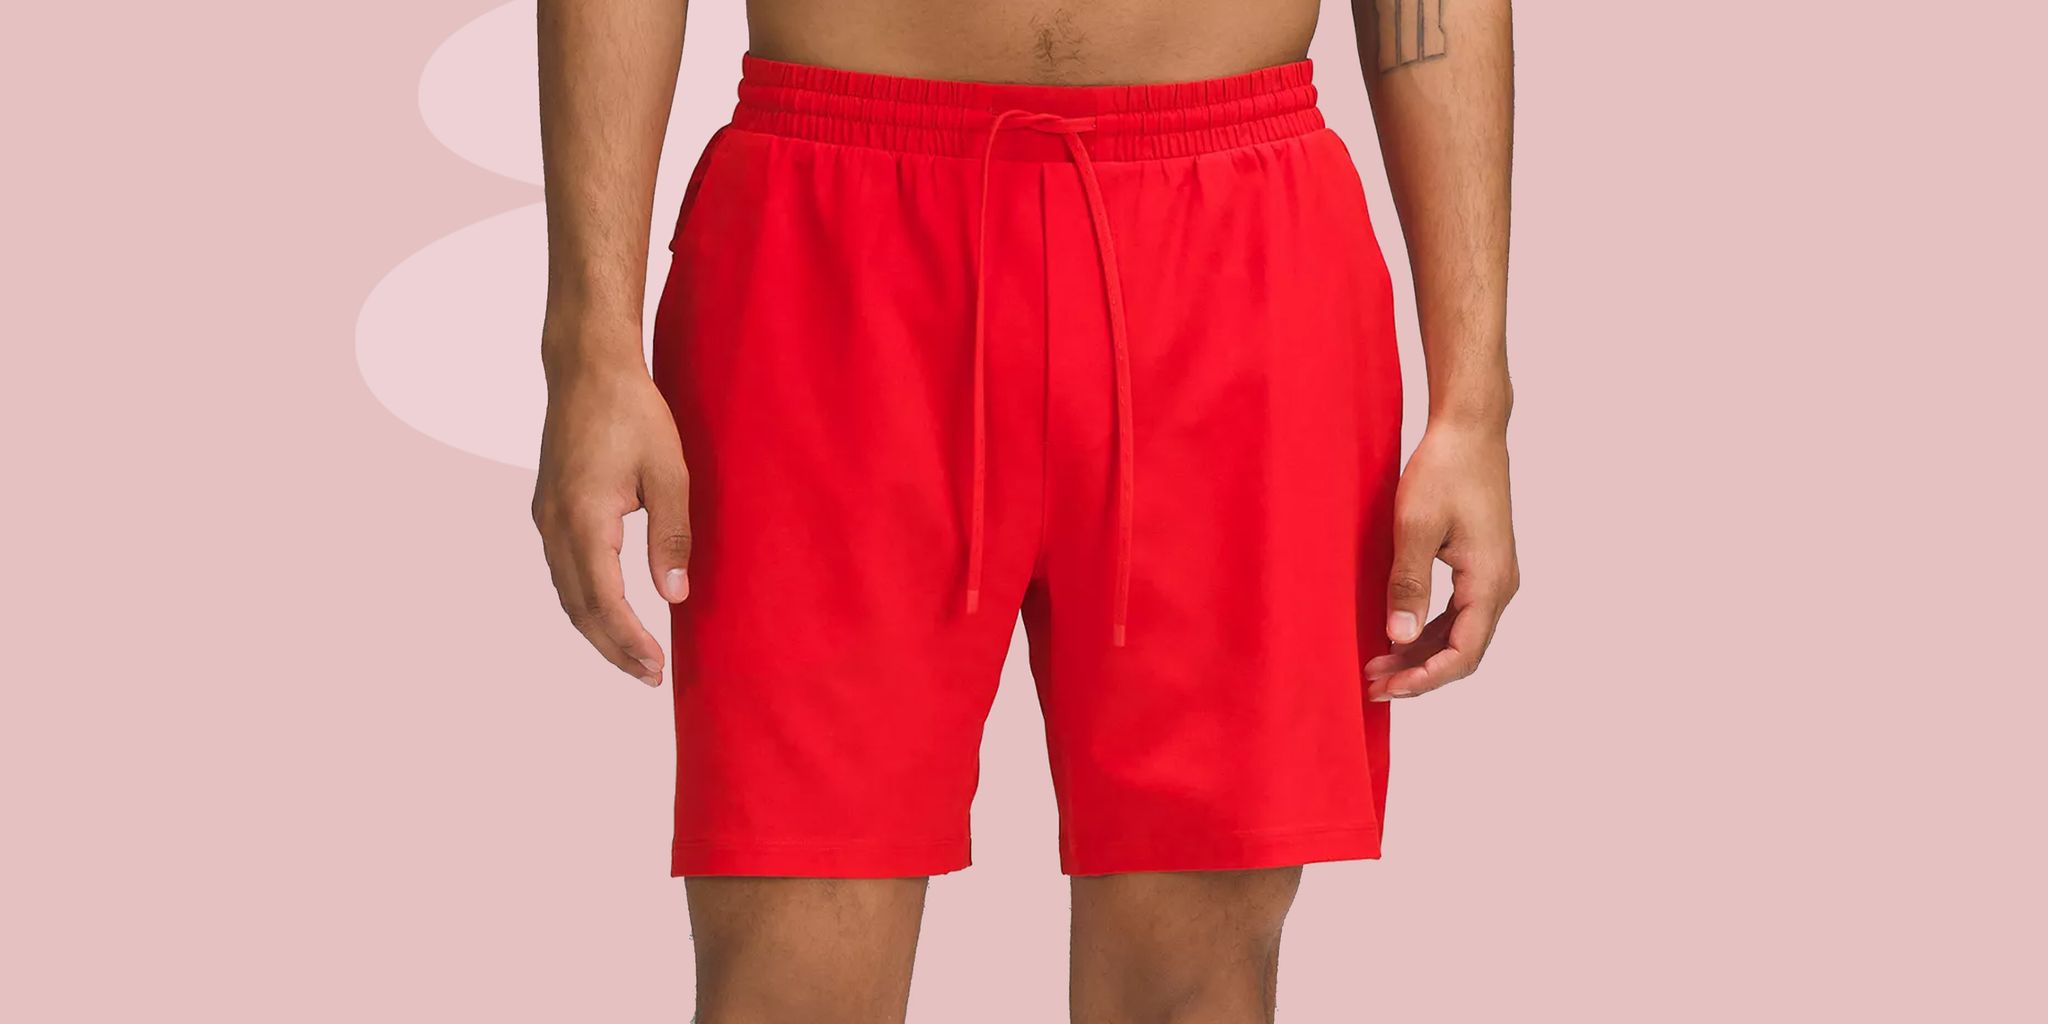 Louis Navy Blue Shorts - Mid Thigh Length Men Swim Shorts